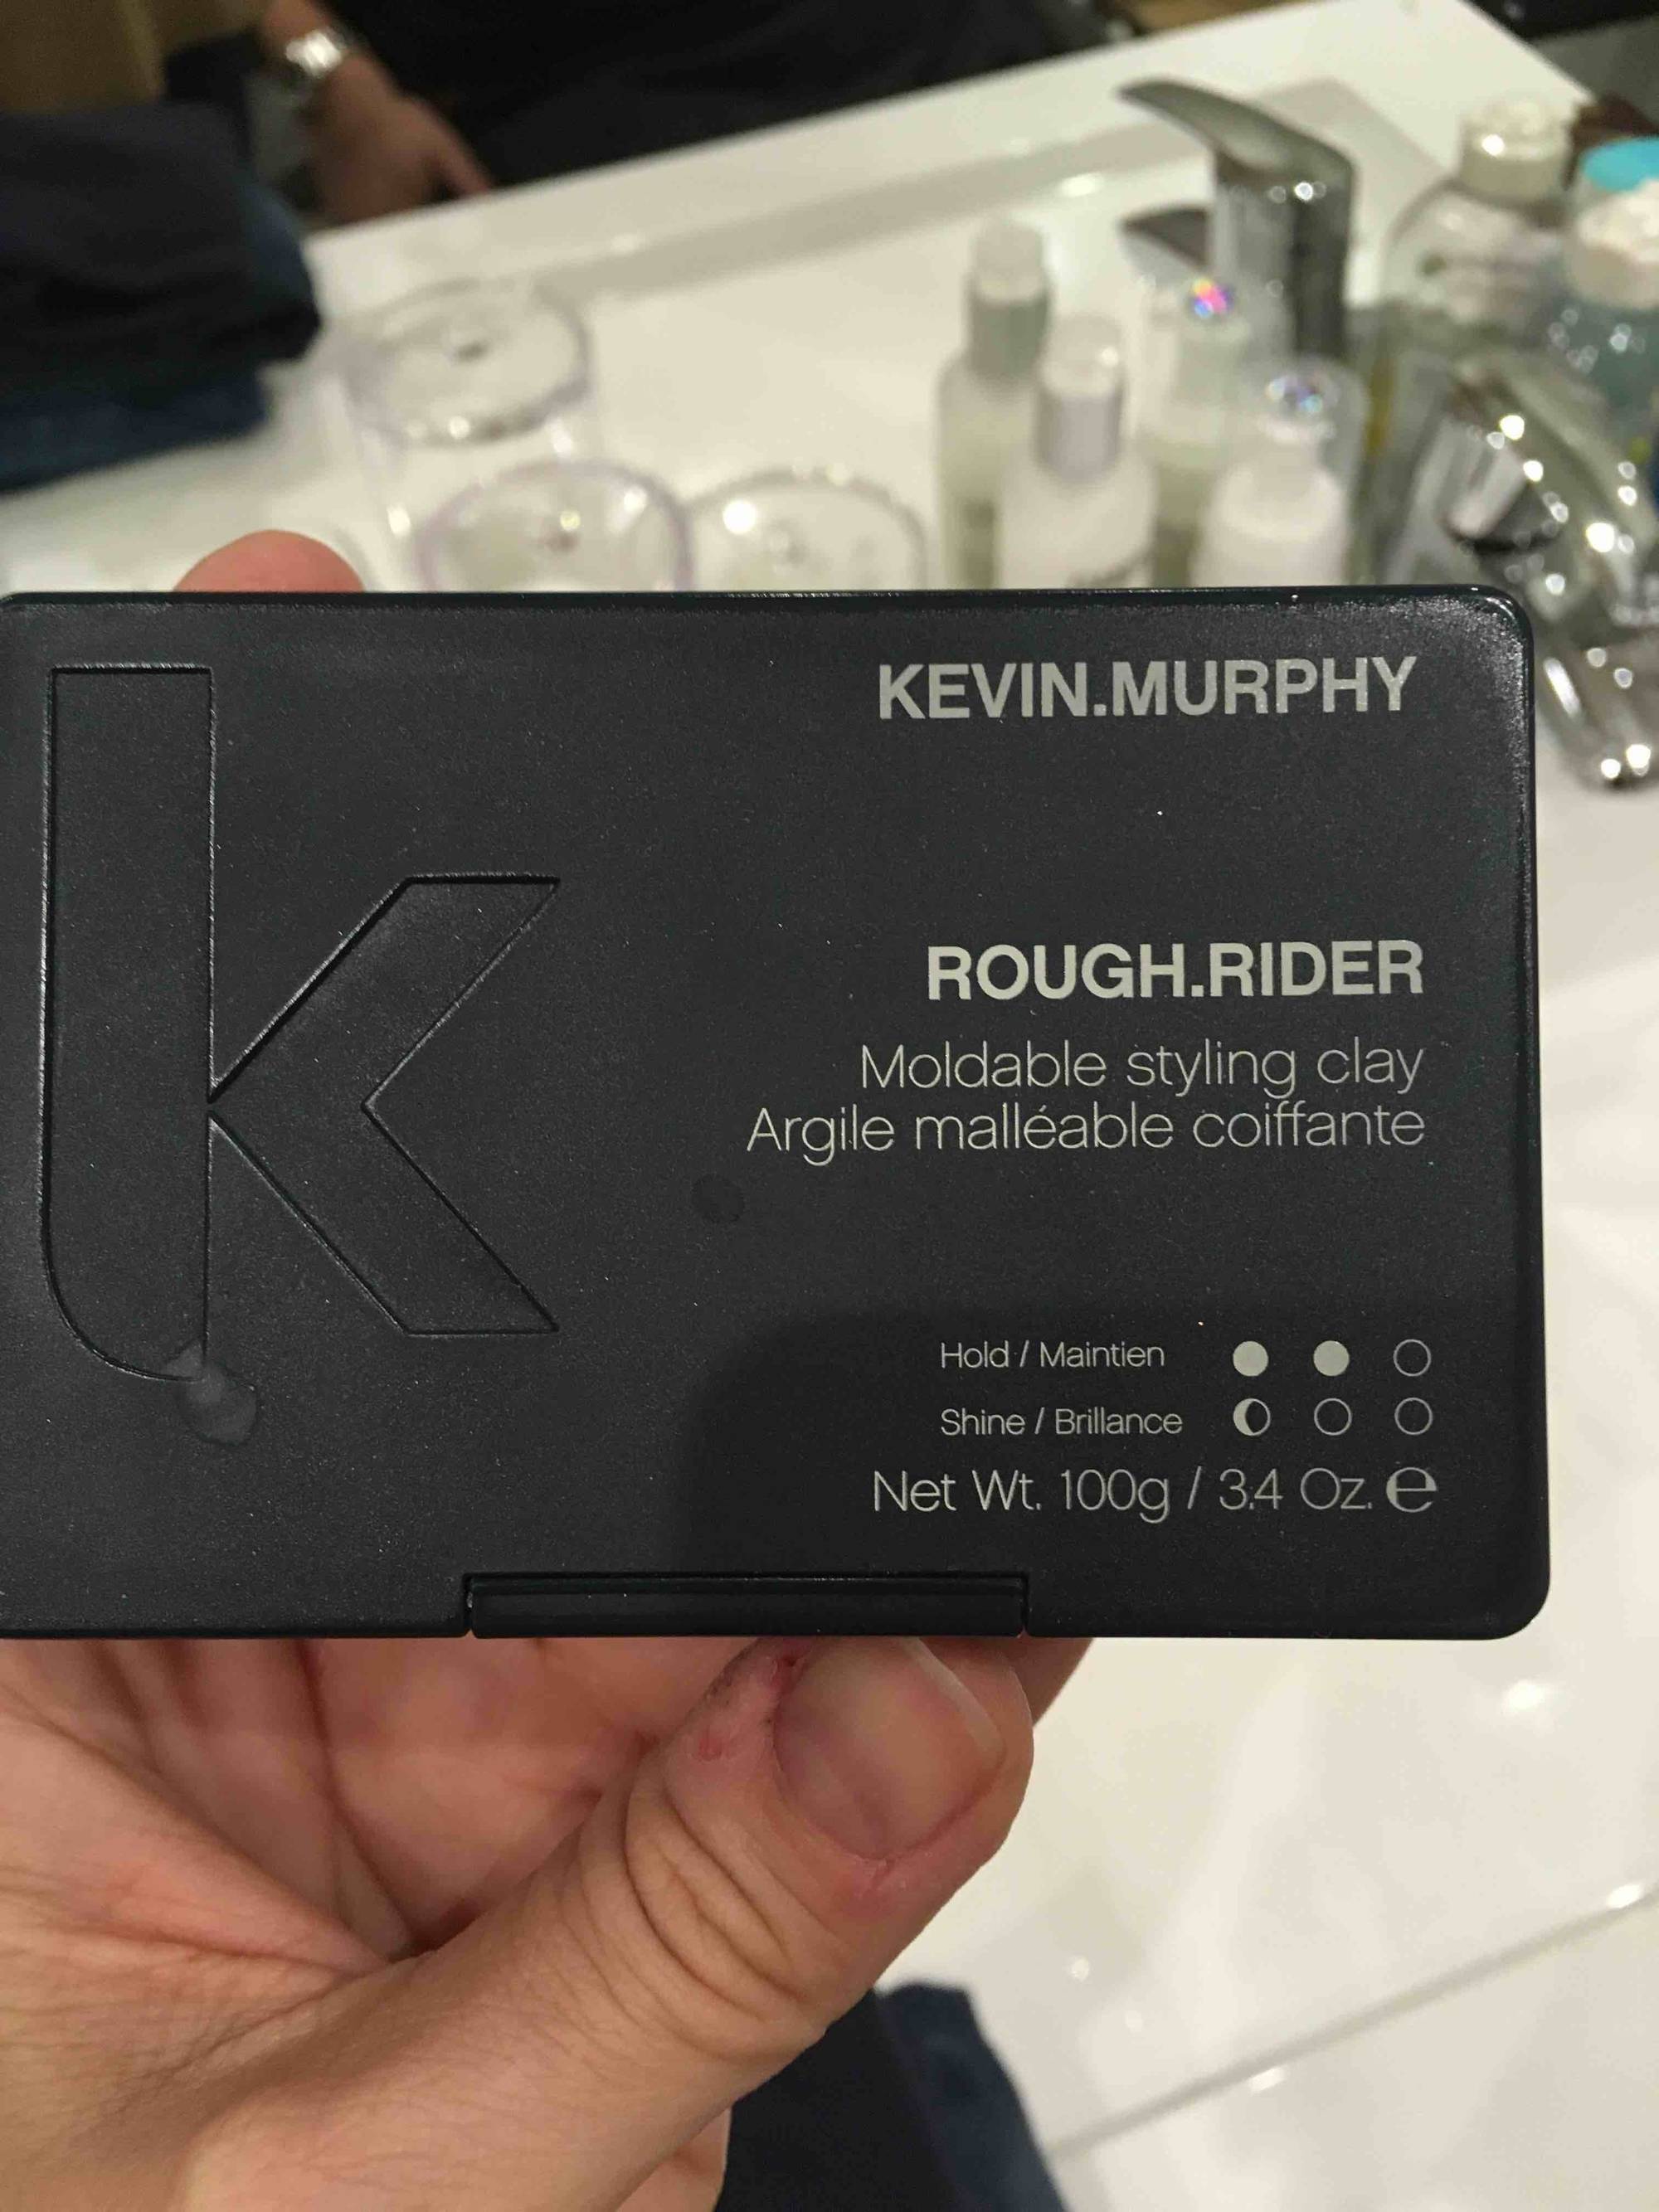 KEVIN MURPHY - Rough.rider - Argile malléable coiffante